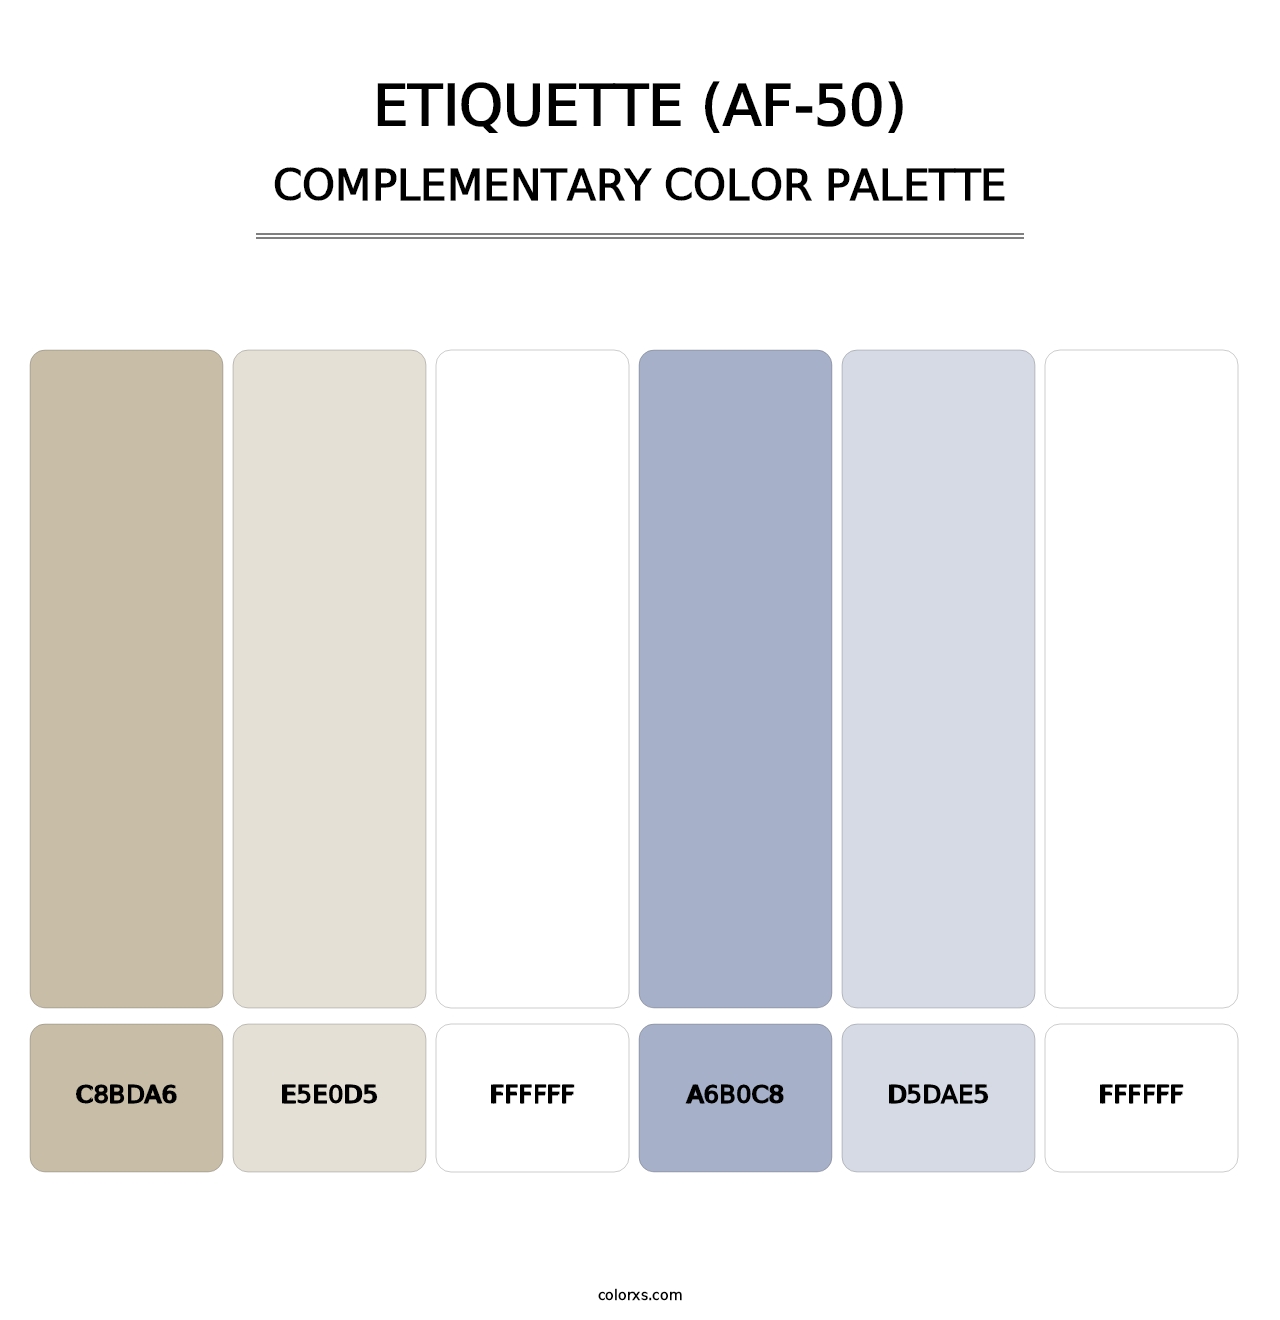 Etiquette (AF-50) - Complementary Color Palette